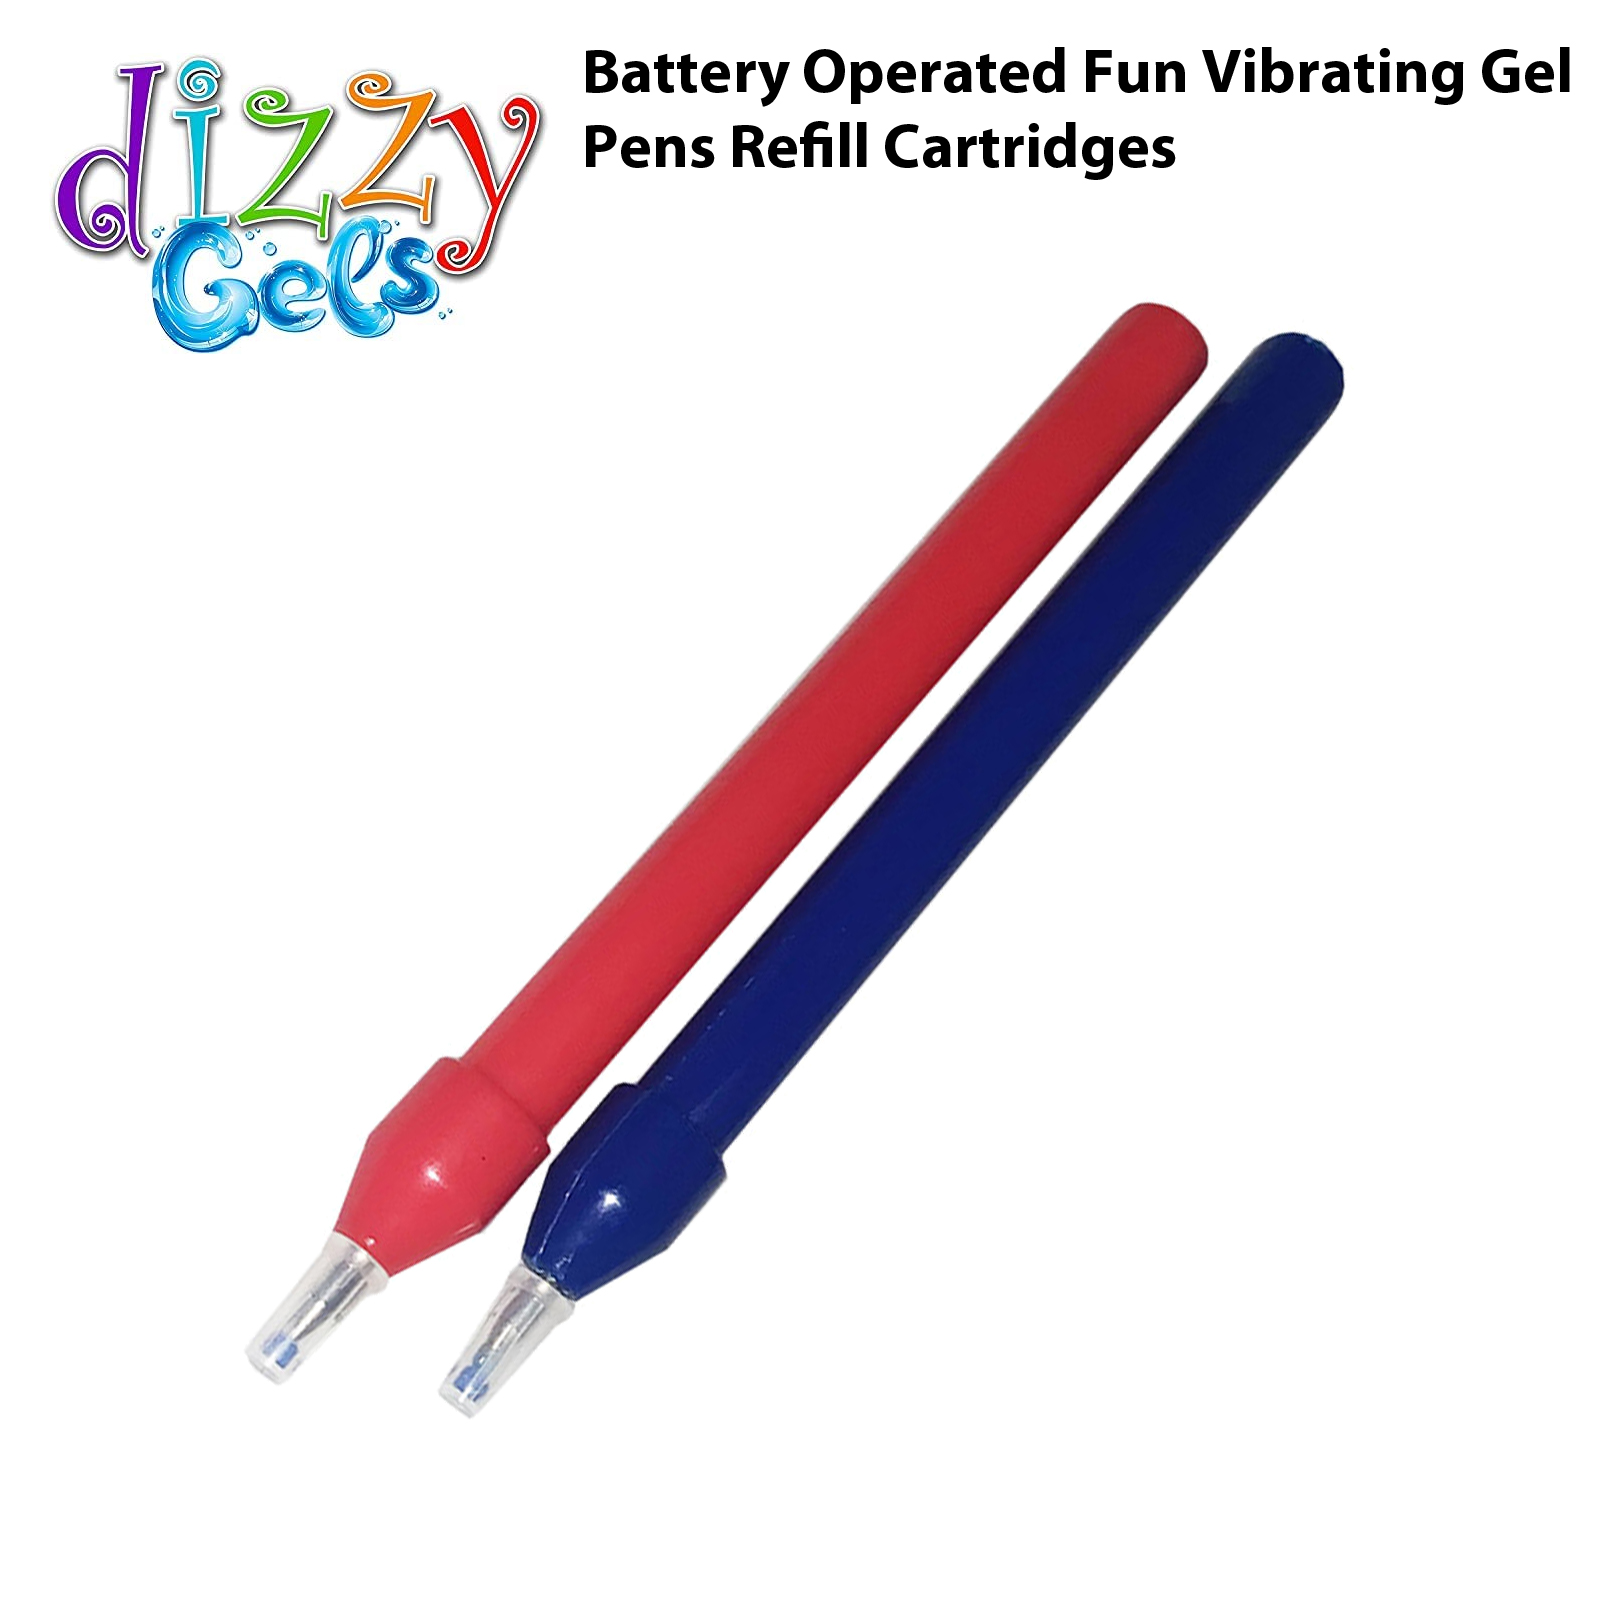 ZSCM Gel Pens Include 48 Glitter Pens, 12 Classic Pen With 60